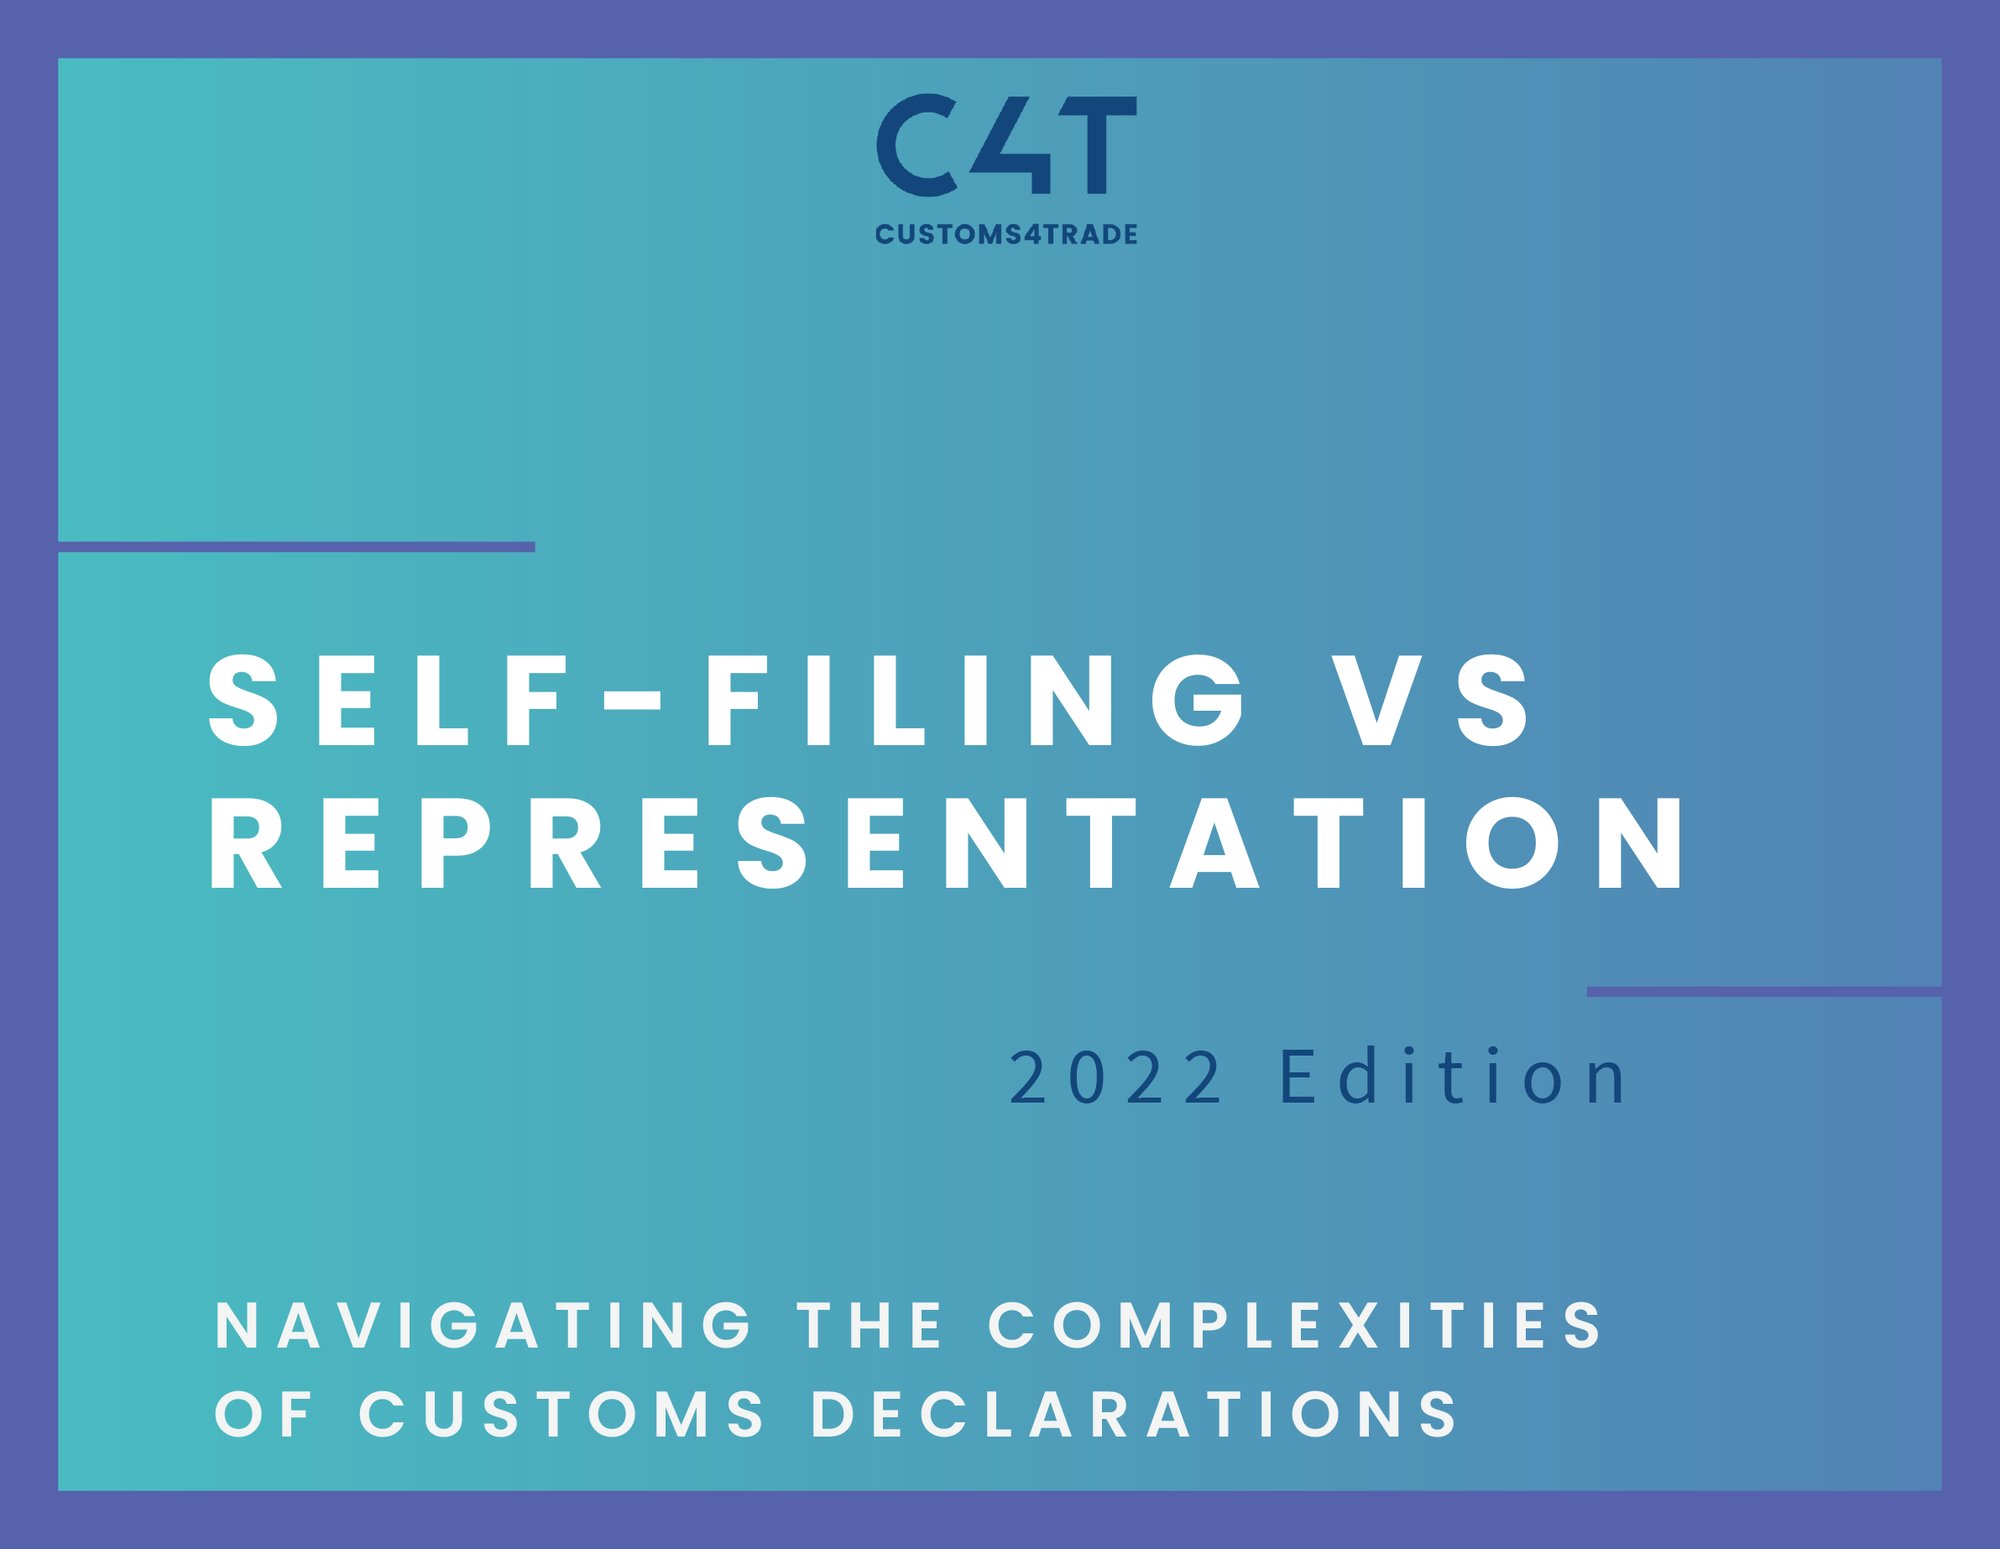 Self-filing vs Representation white paper cover rectangle